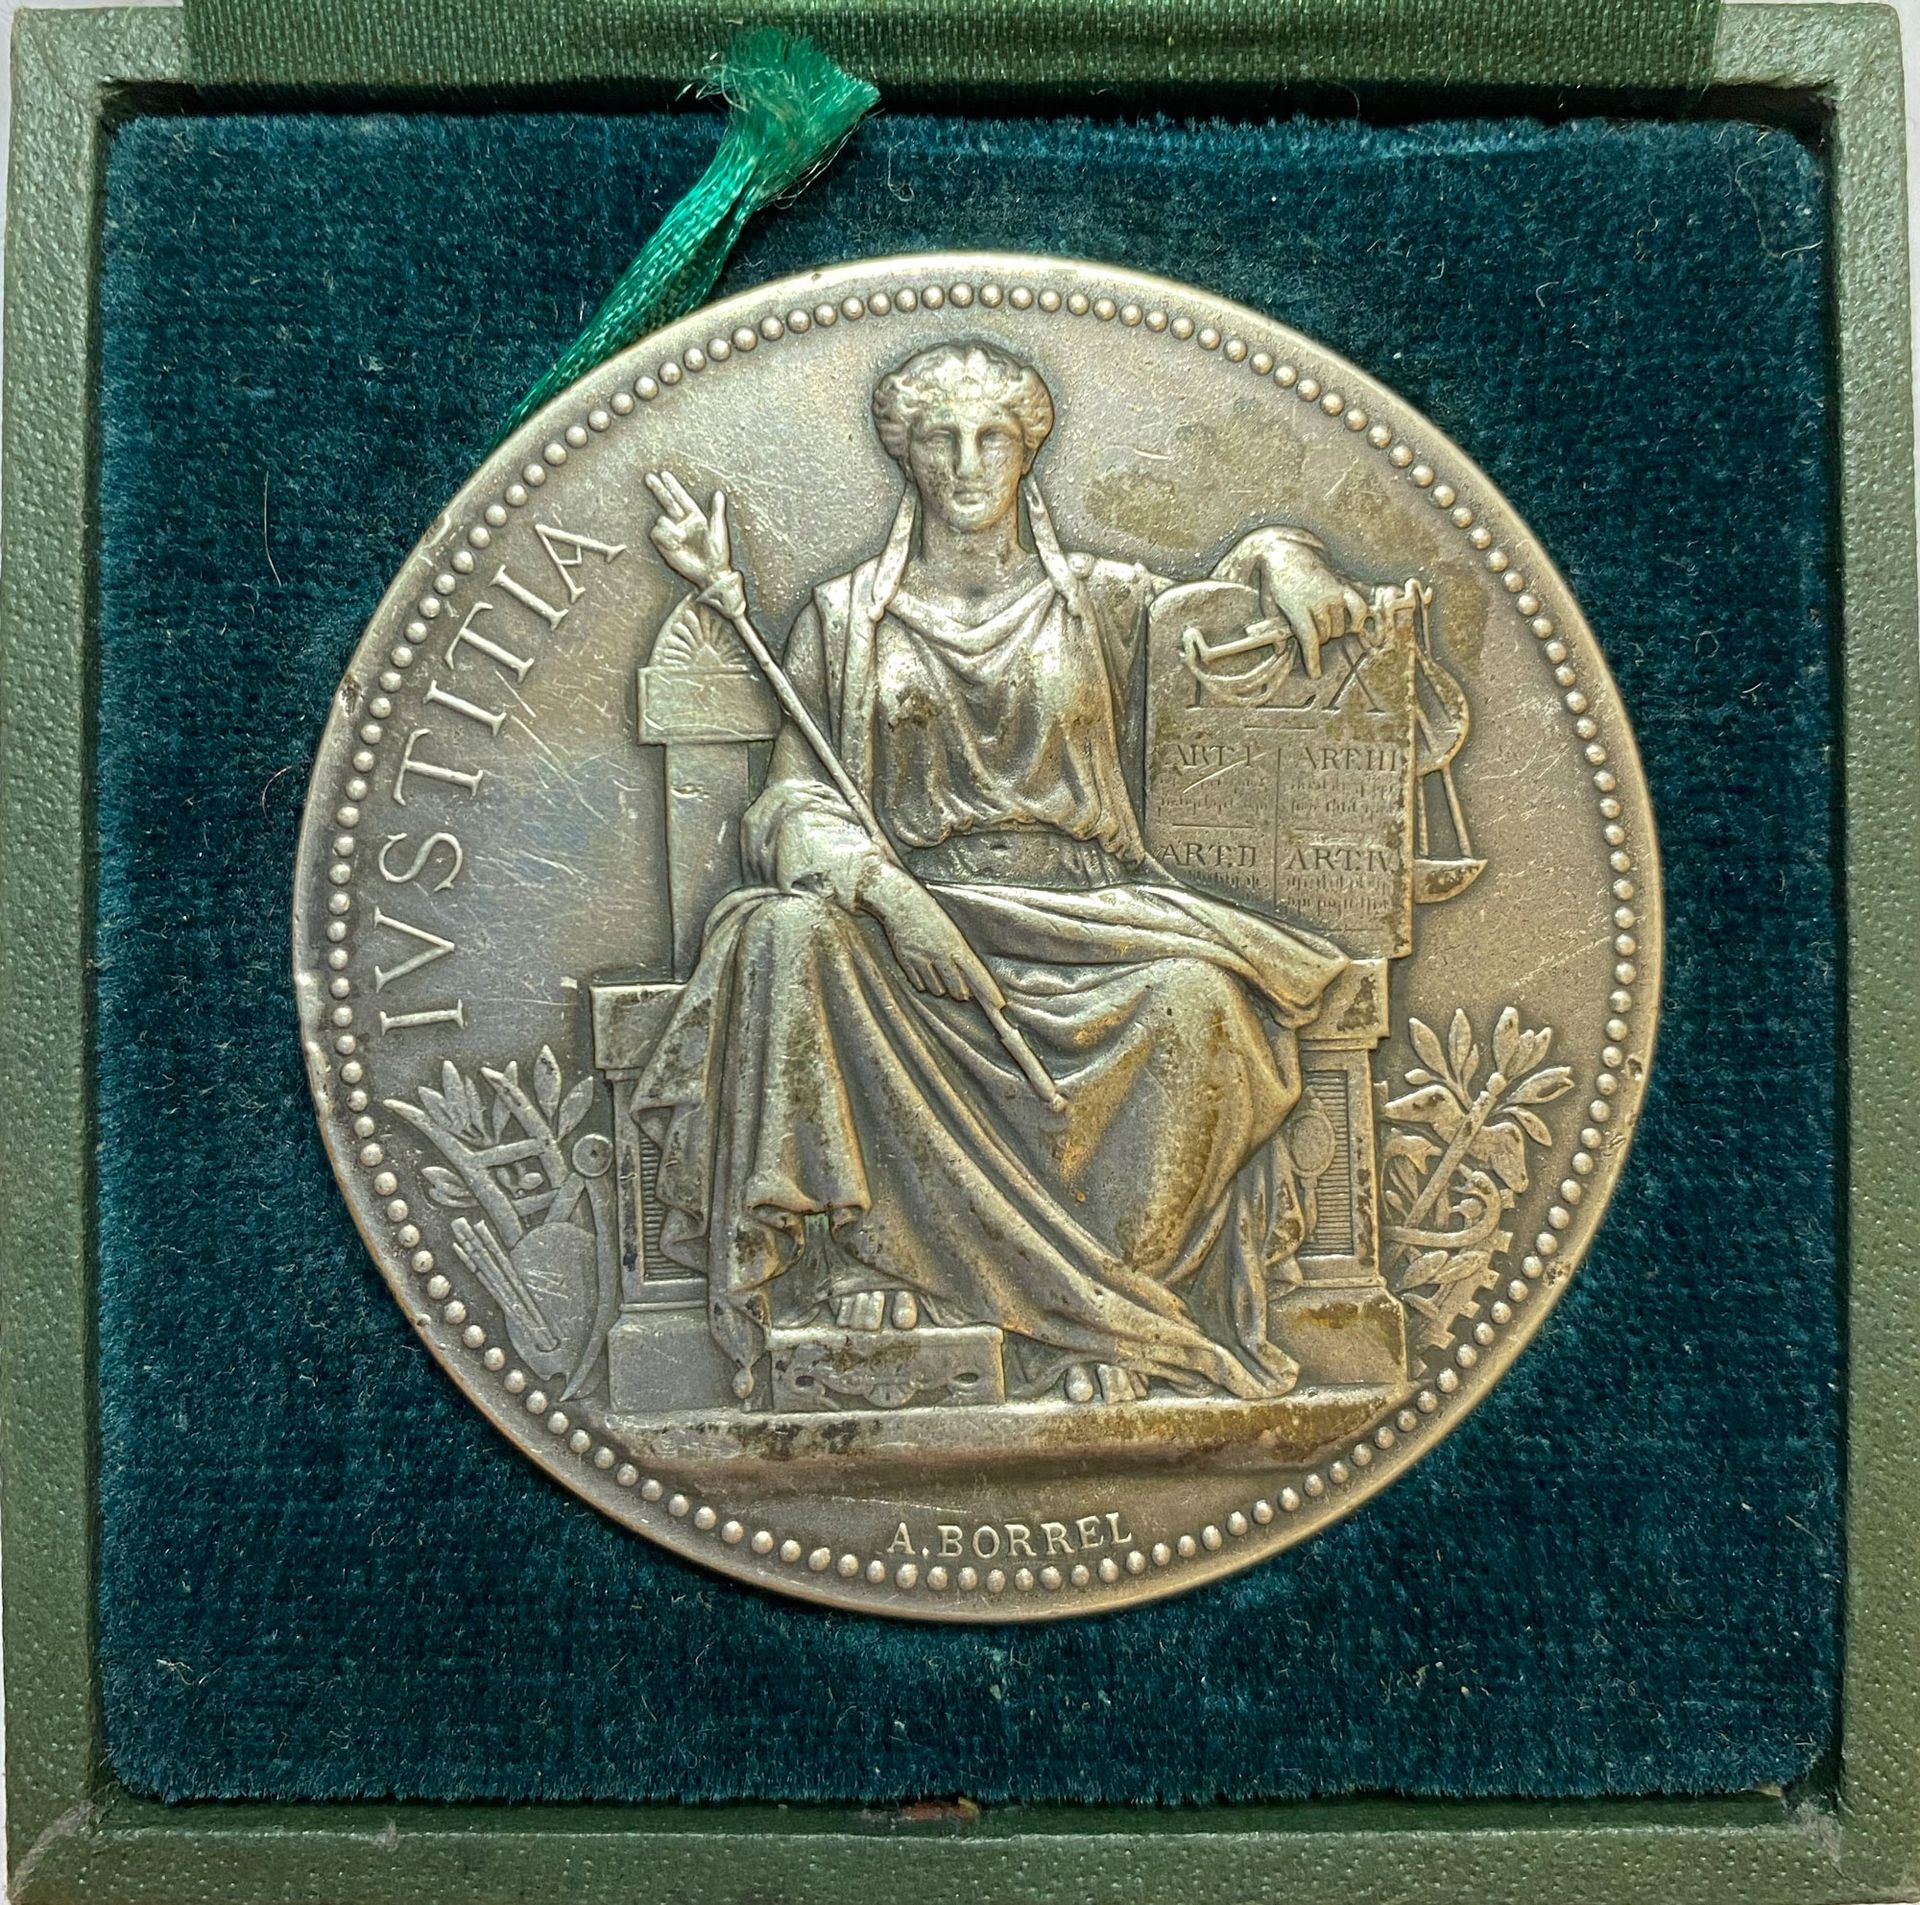 Null 塞纳河法庭，Borrel创作的身份勋章，描绘了坐着的法官，背面有浮雕 "Emile Magnin Juge d'Instruction先生"，有巴黎大&hellip;